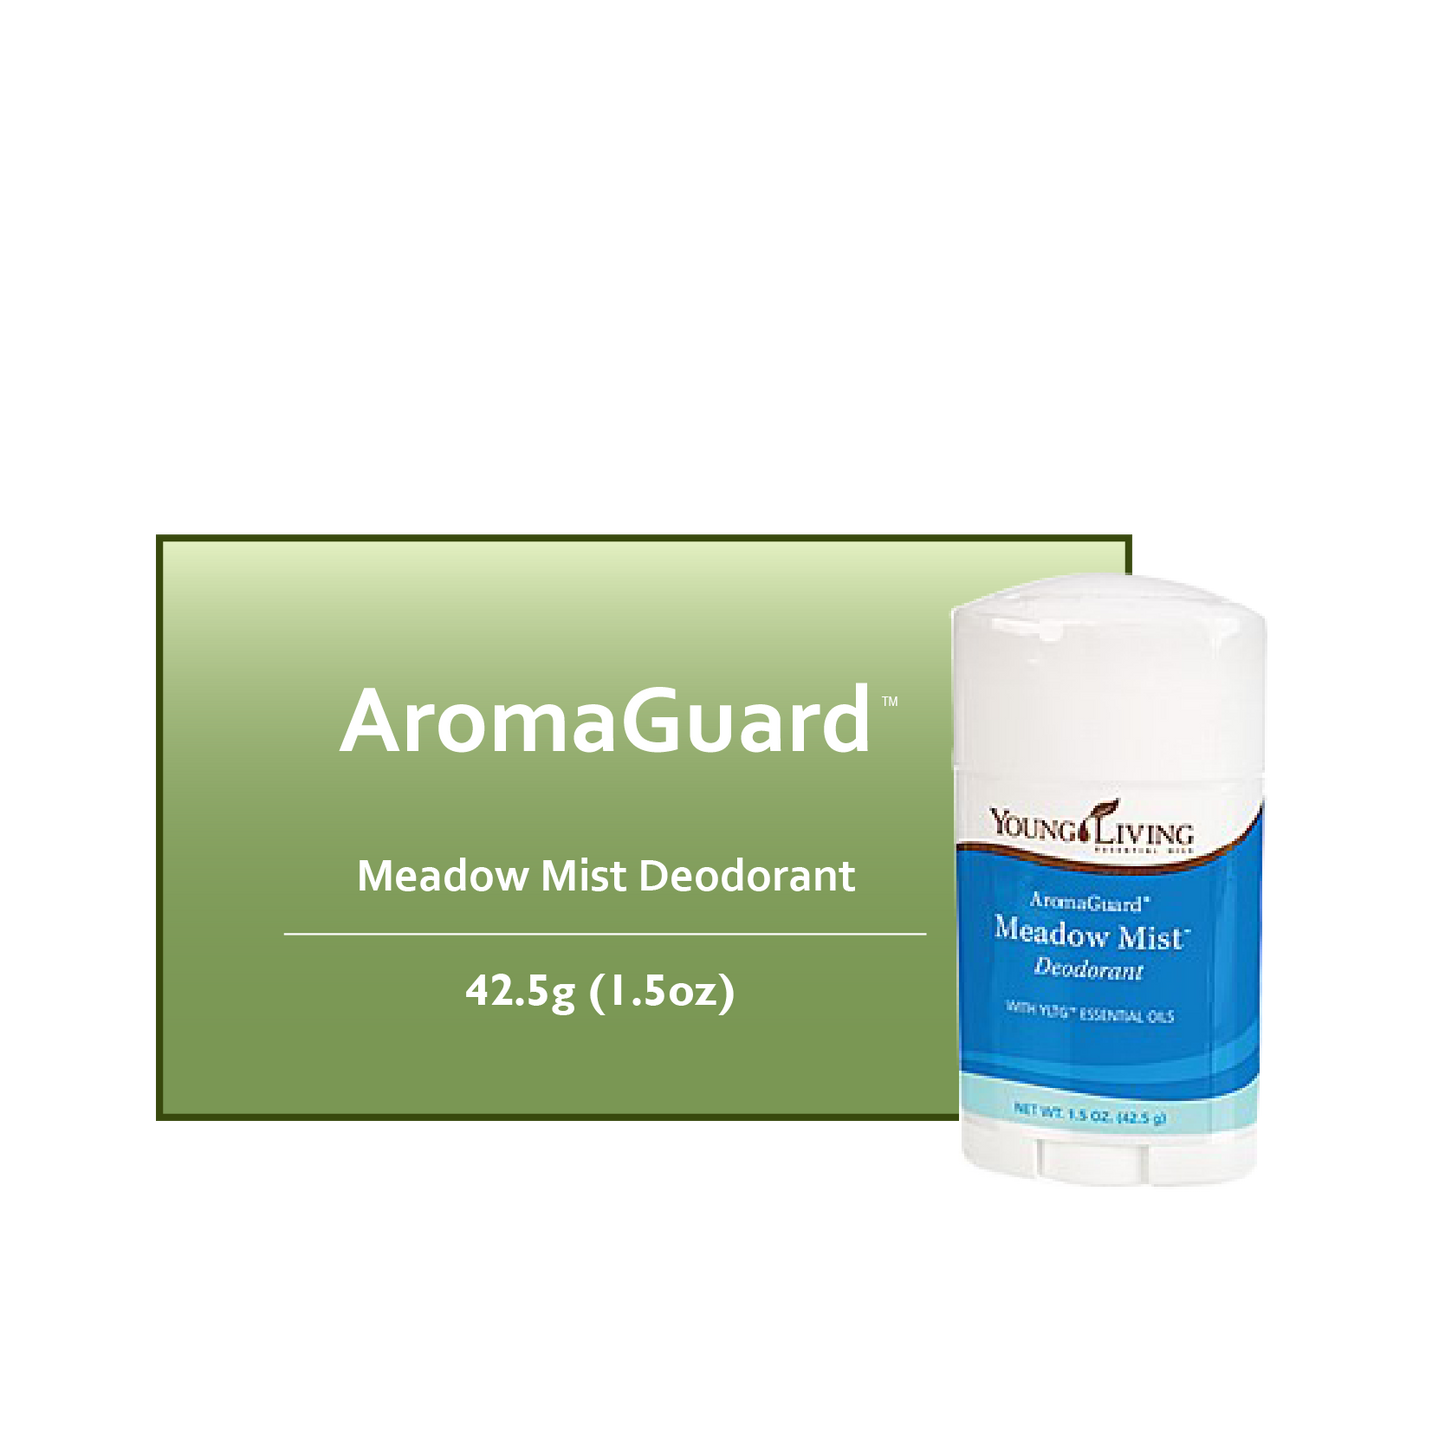 YL AromaGuard Meadow Mist Deodorant